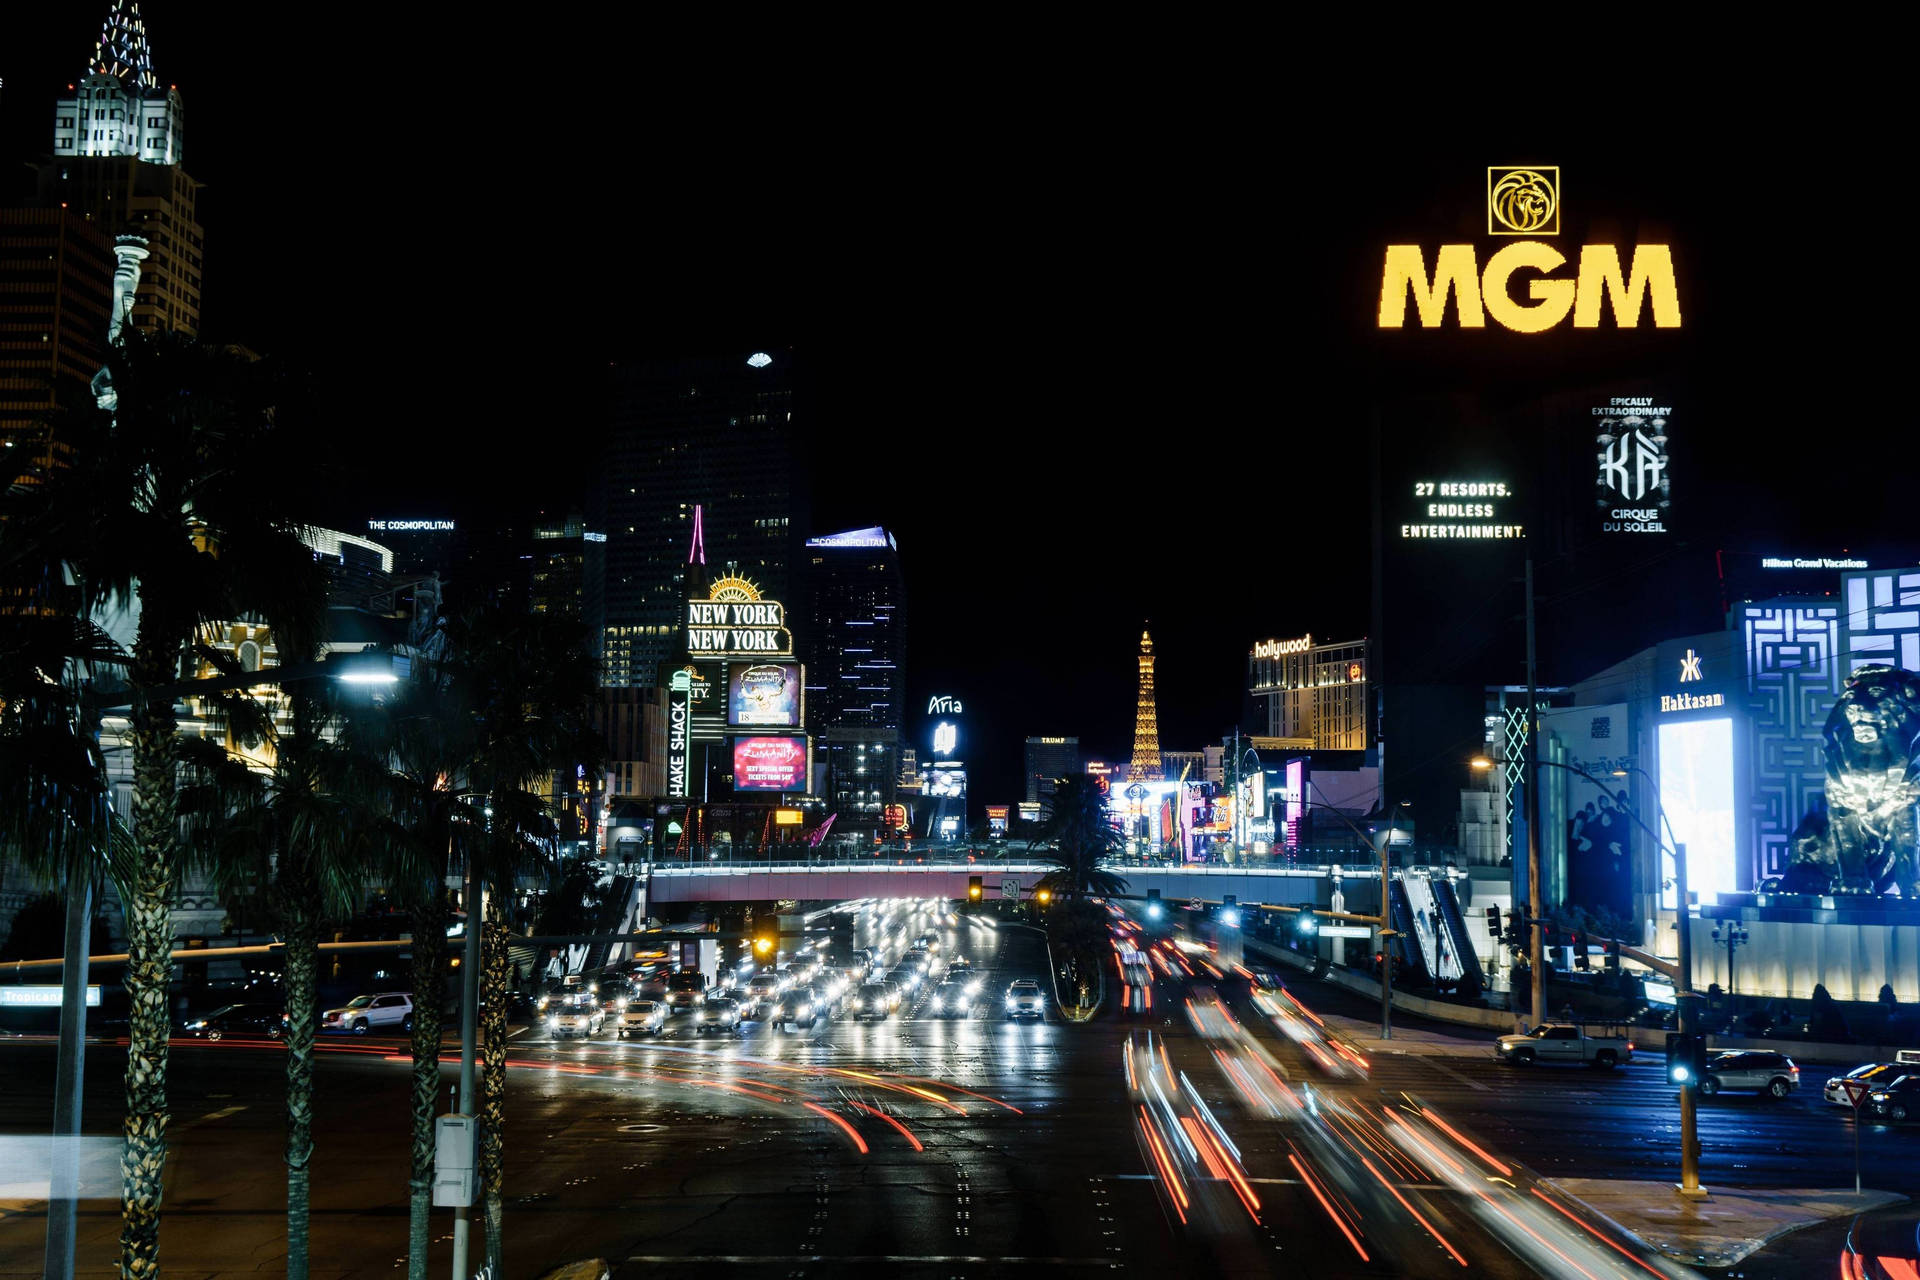 Las Vegas 4k MGM Grand Wallpaper